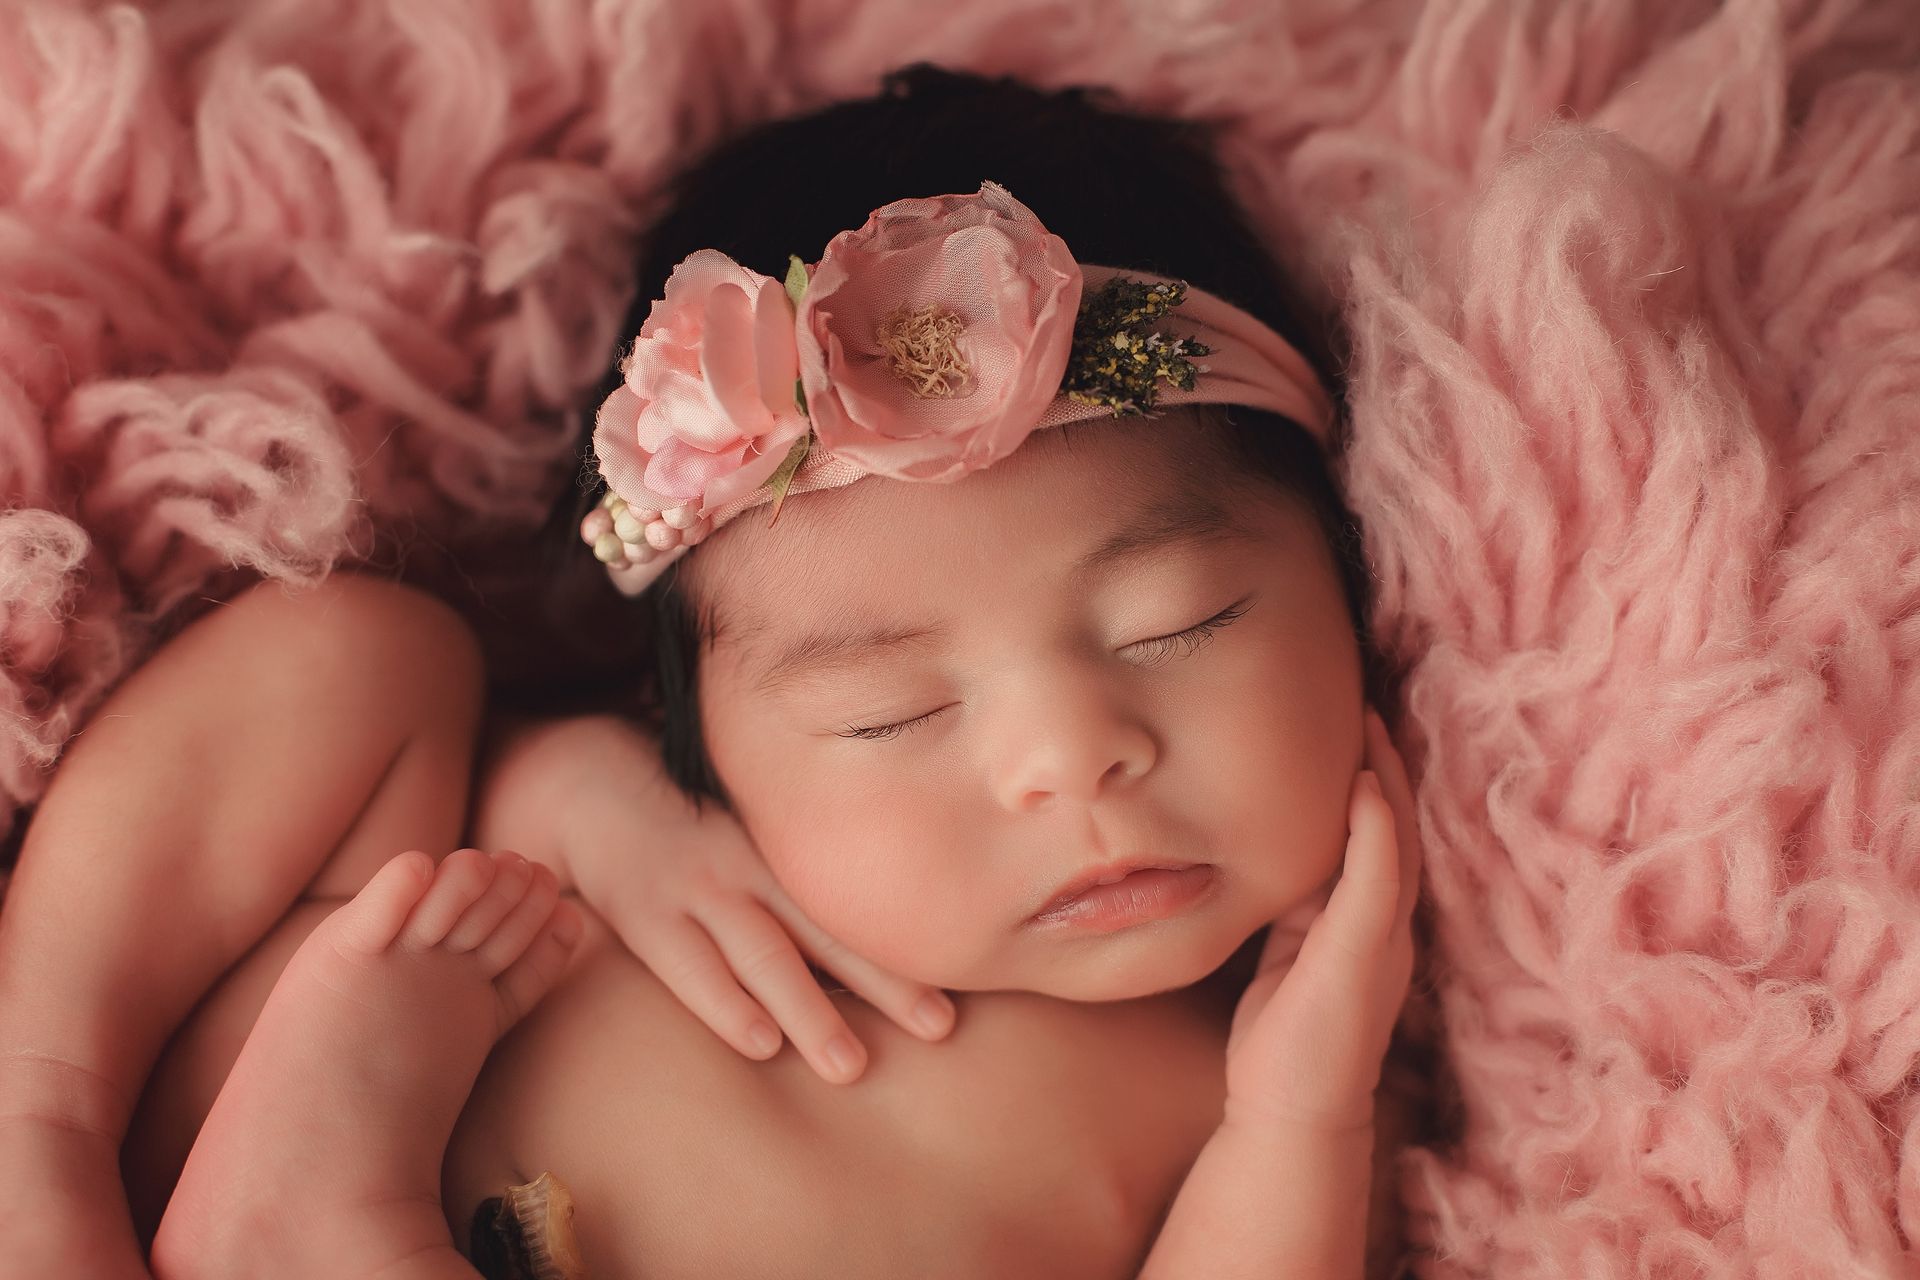 A newborn baby girl wearing a pink flower headband is sleeping on a pink blanket.